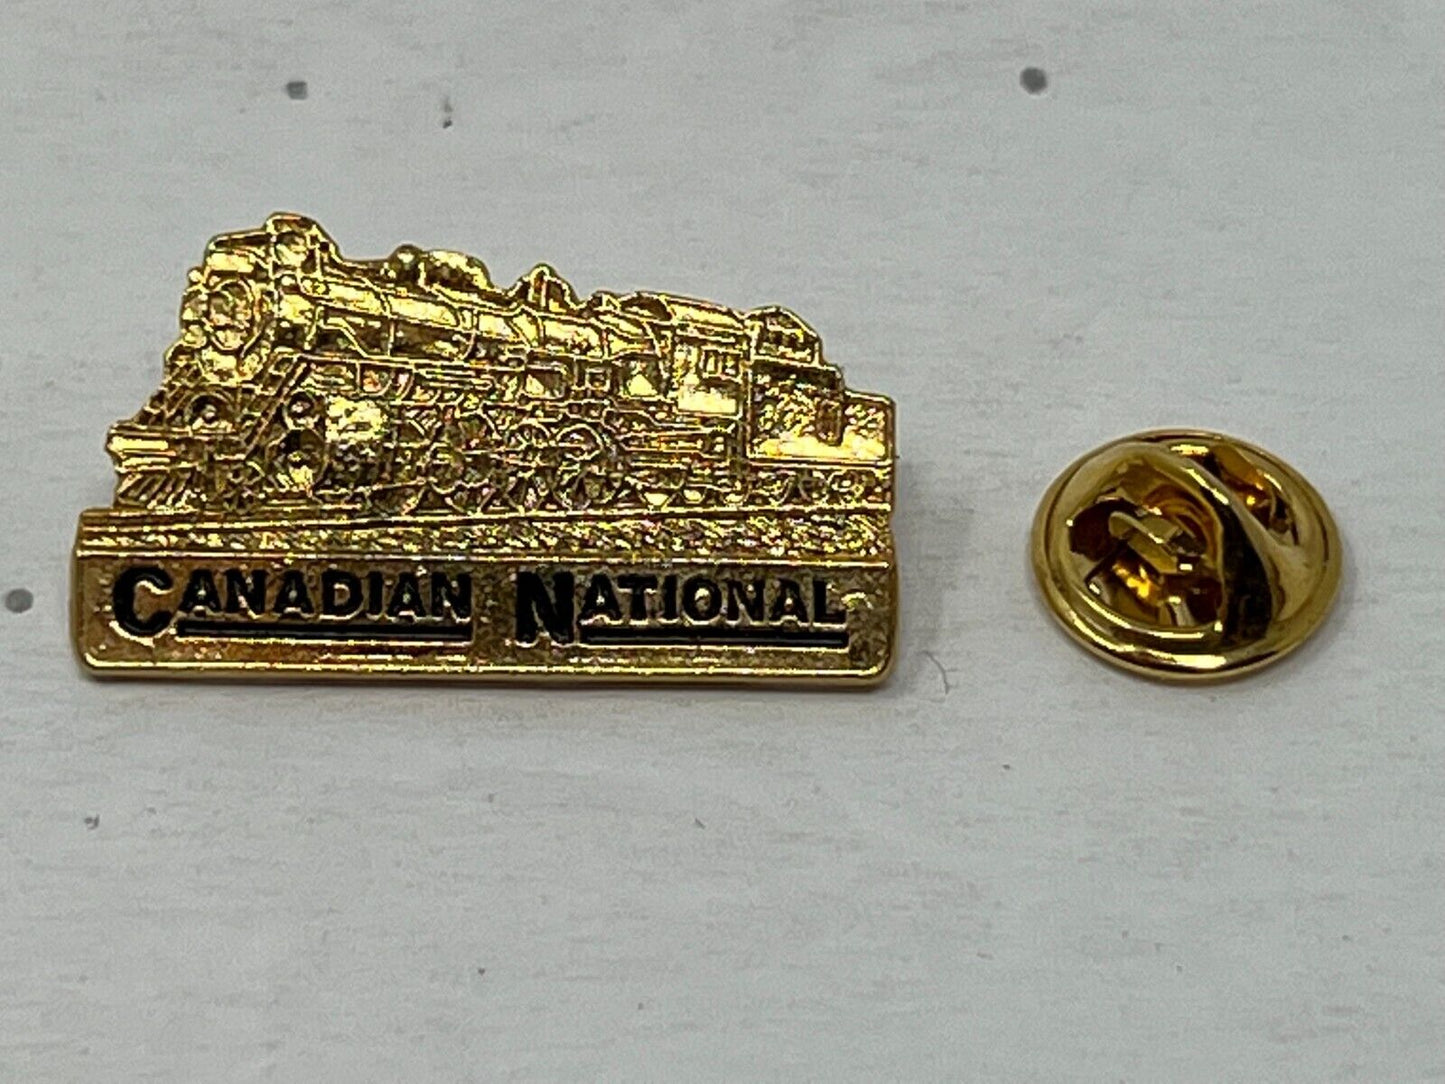 Canadian National Railway Automotive Lapel Pin